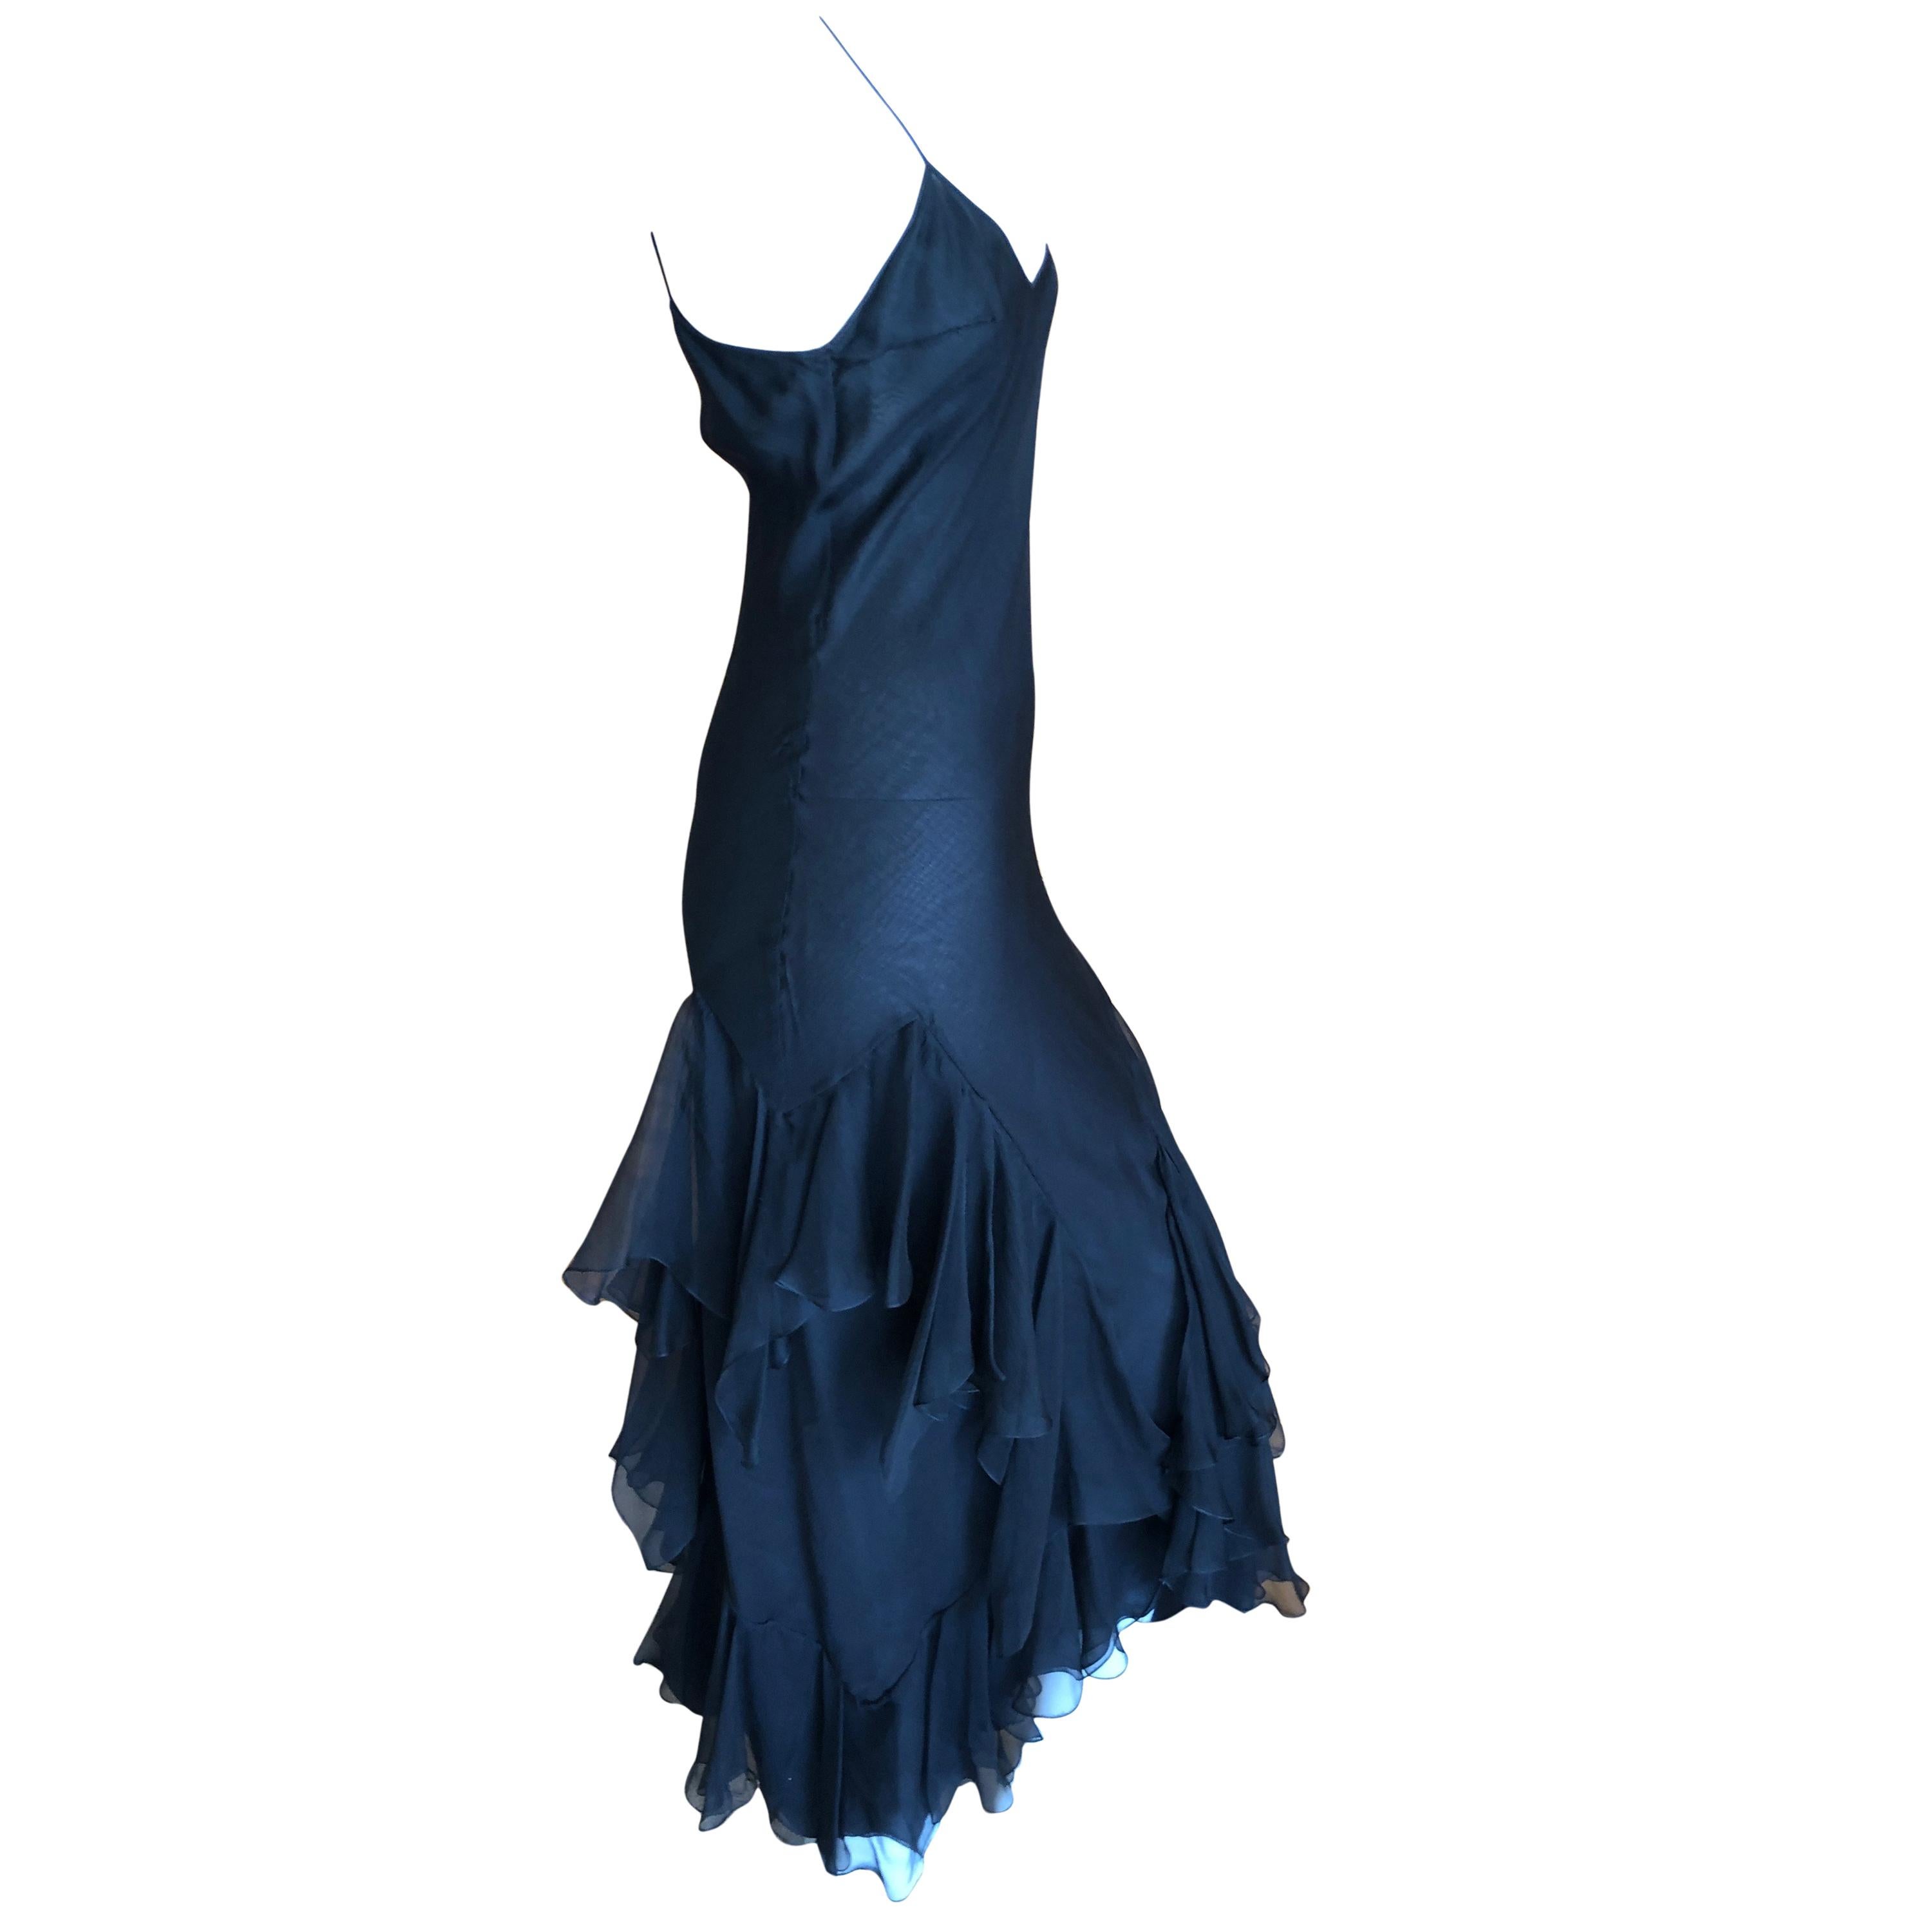 John Galliano 1990's Bias Cut Black Slip Dress with Flamenco Ruffles For Sale